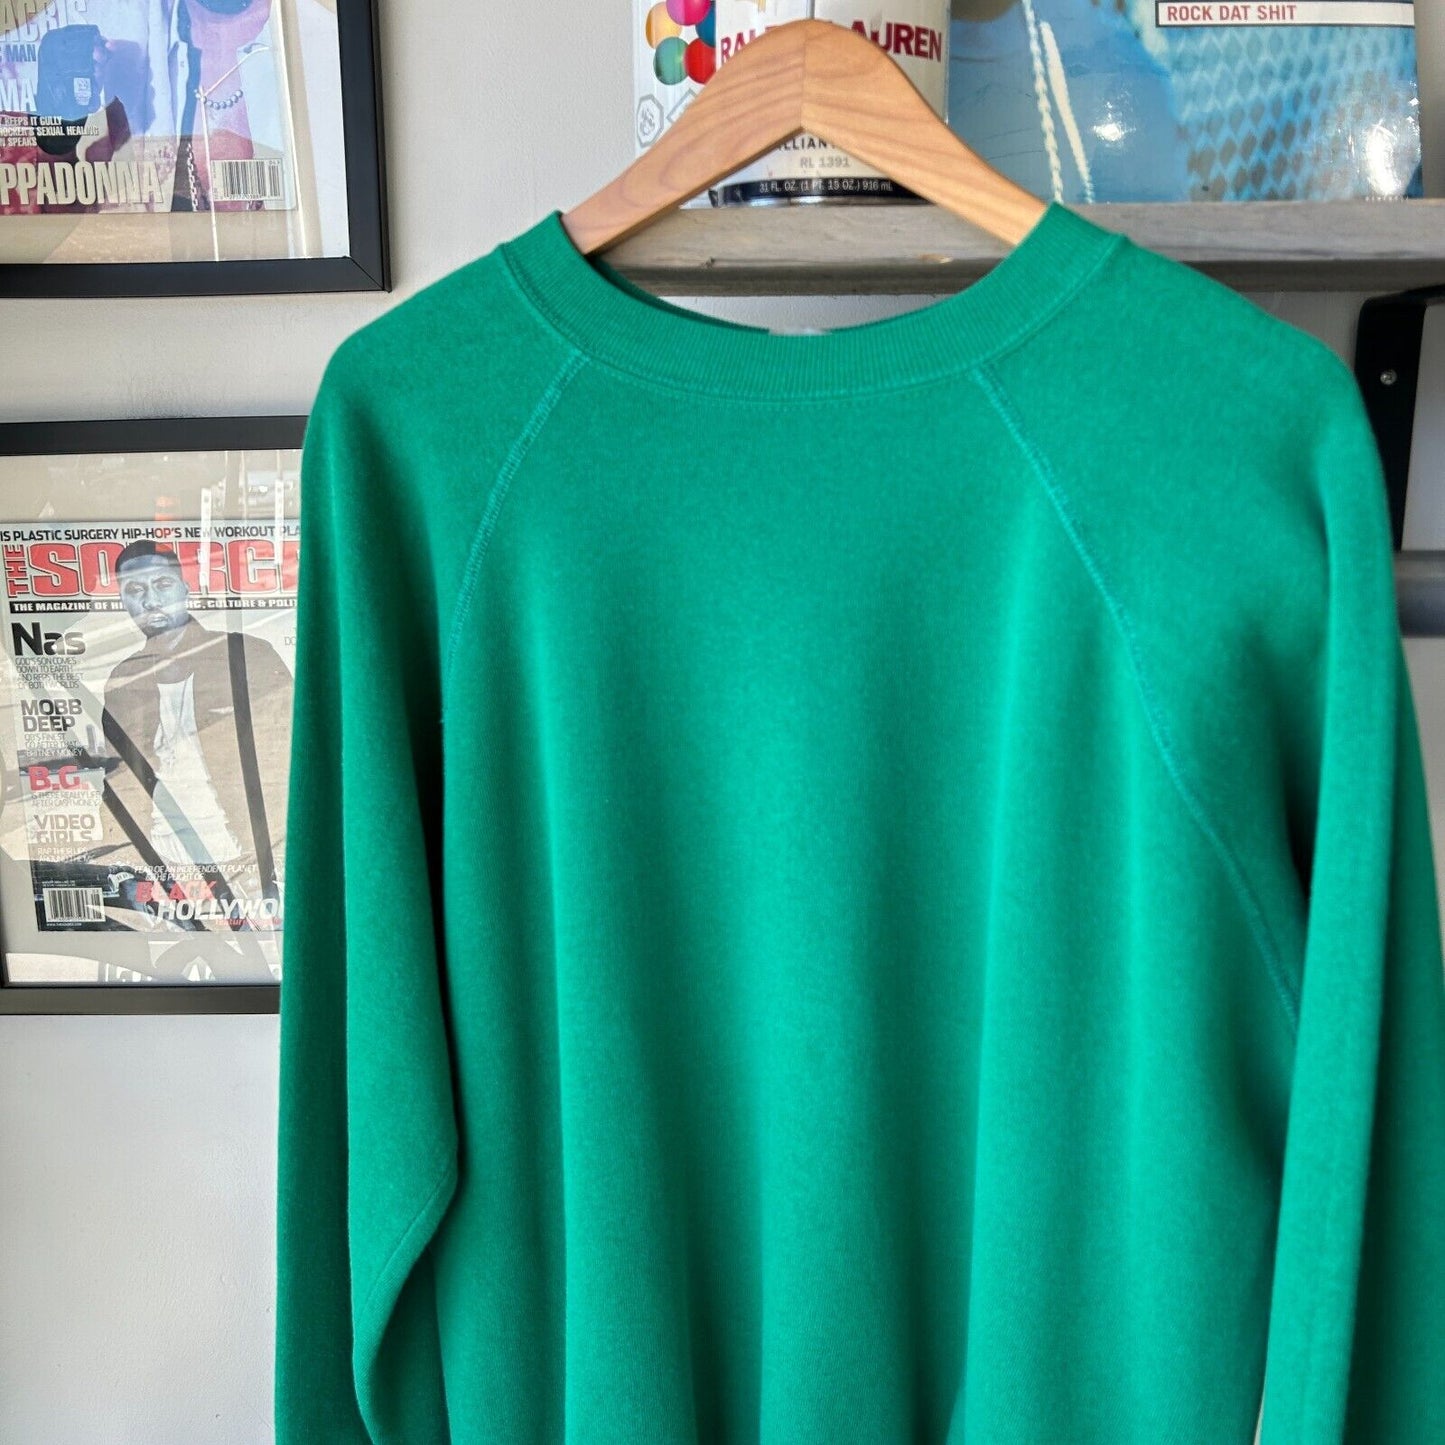 VINTAGE 80s | BLANK Green Raglan Cut Crewneck Sweater sz L Adult